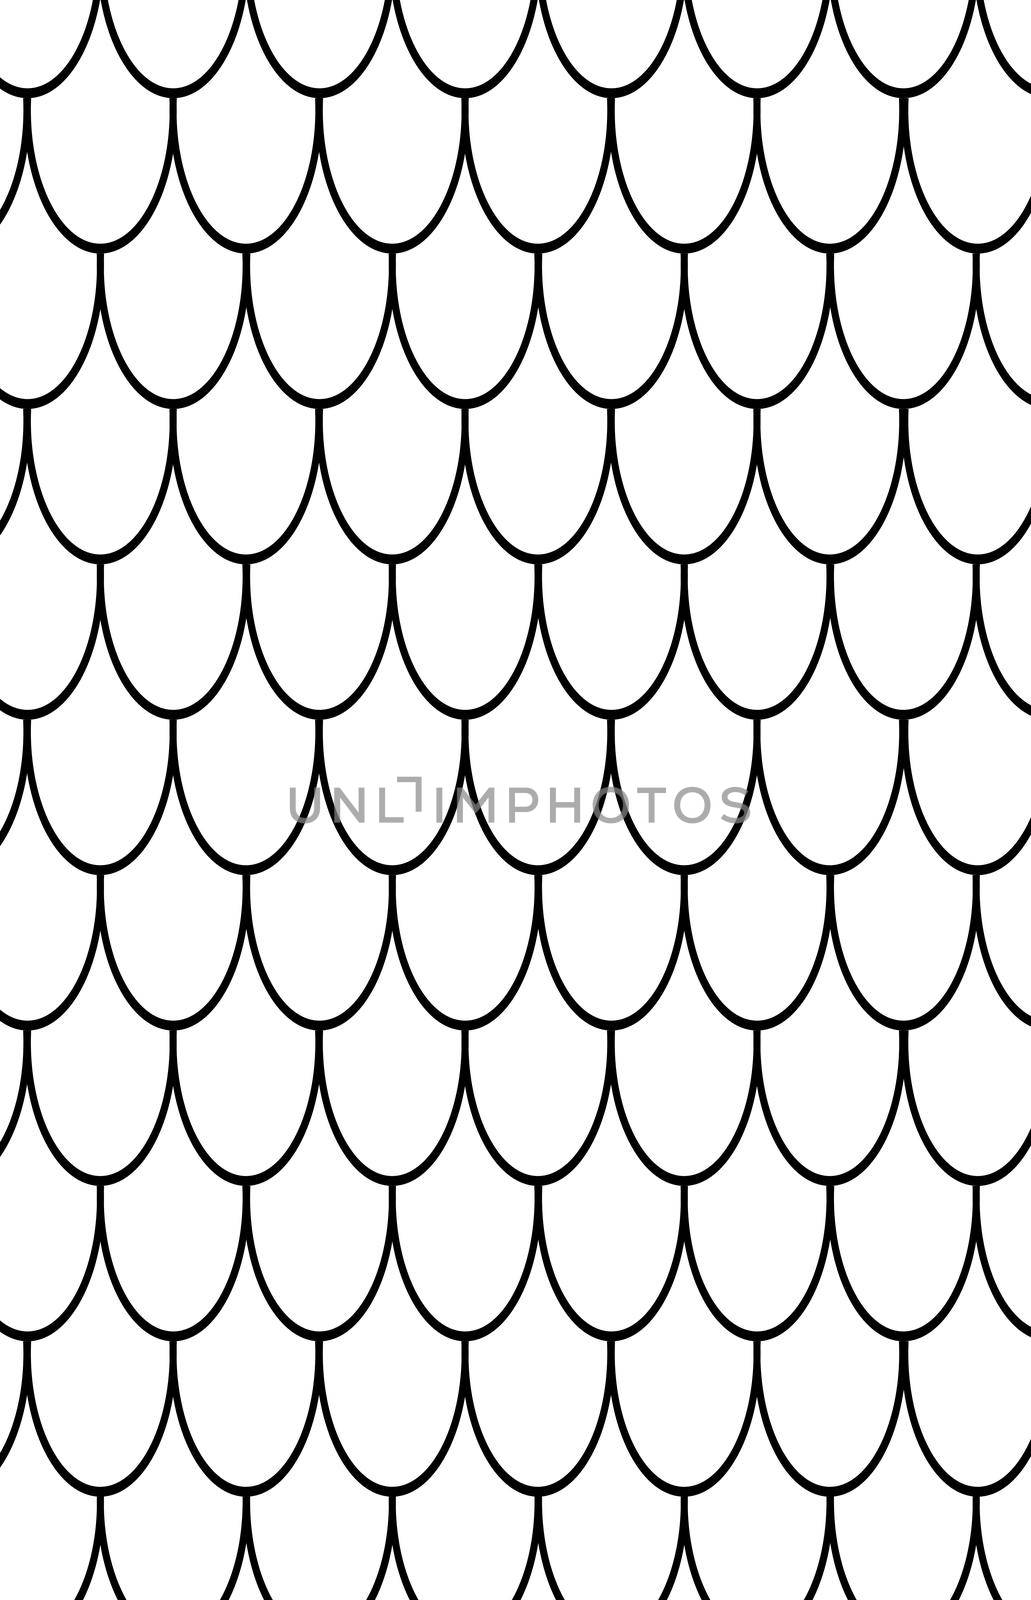 Fish scale motif. Art. Pattern. Background. Illustration by nazarovsergey